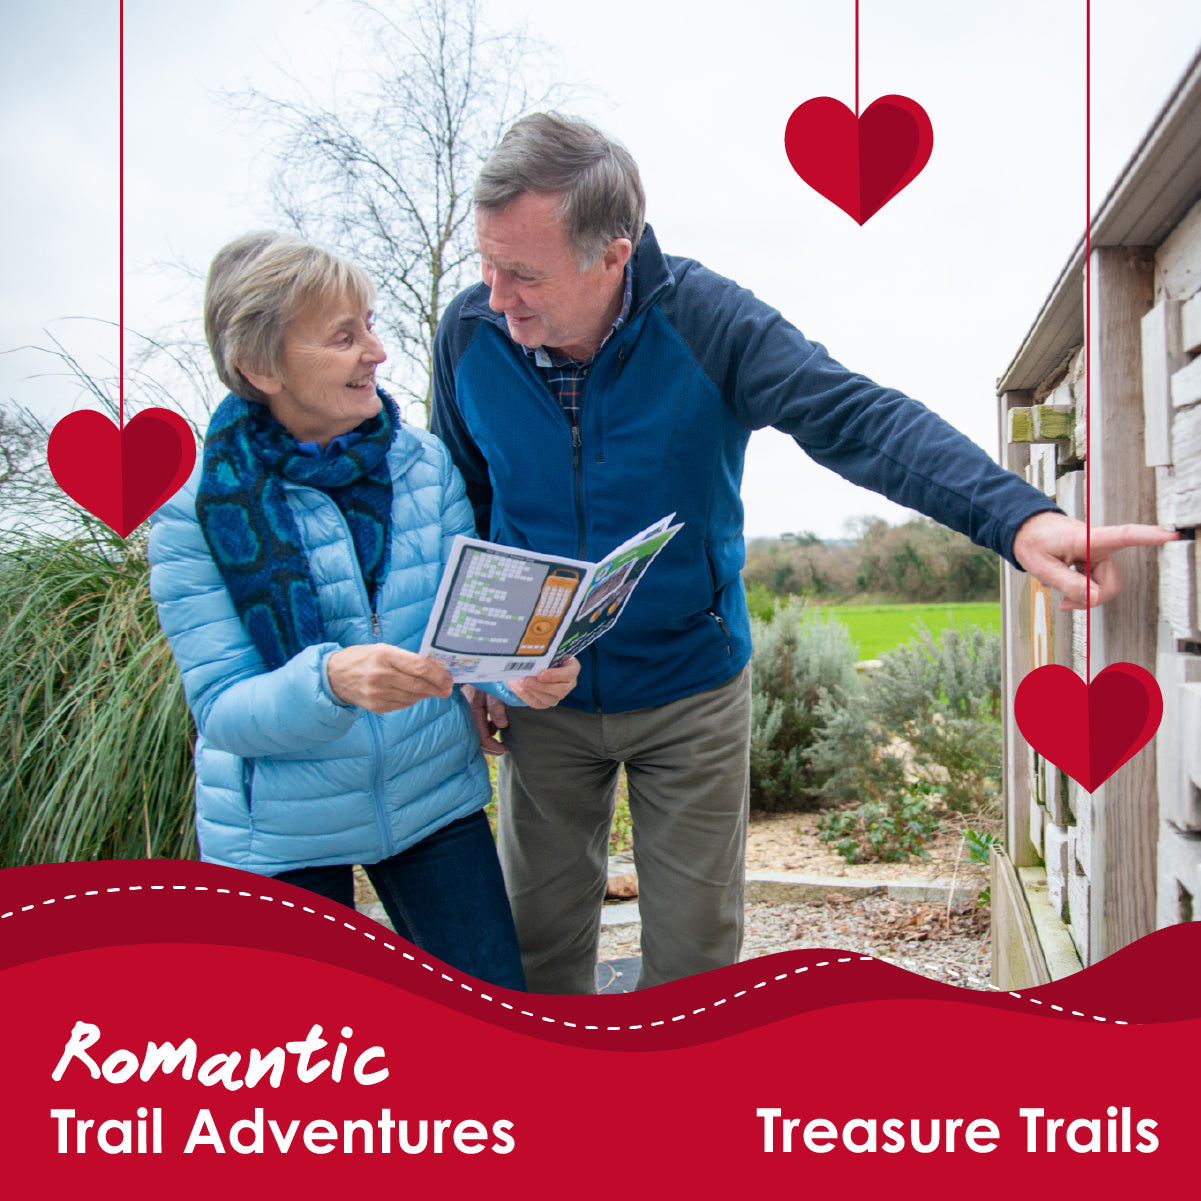 Romantic Trail adventures from Treasure Trails